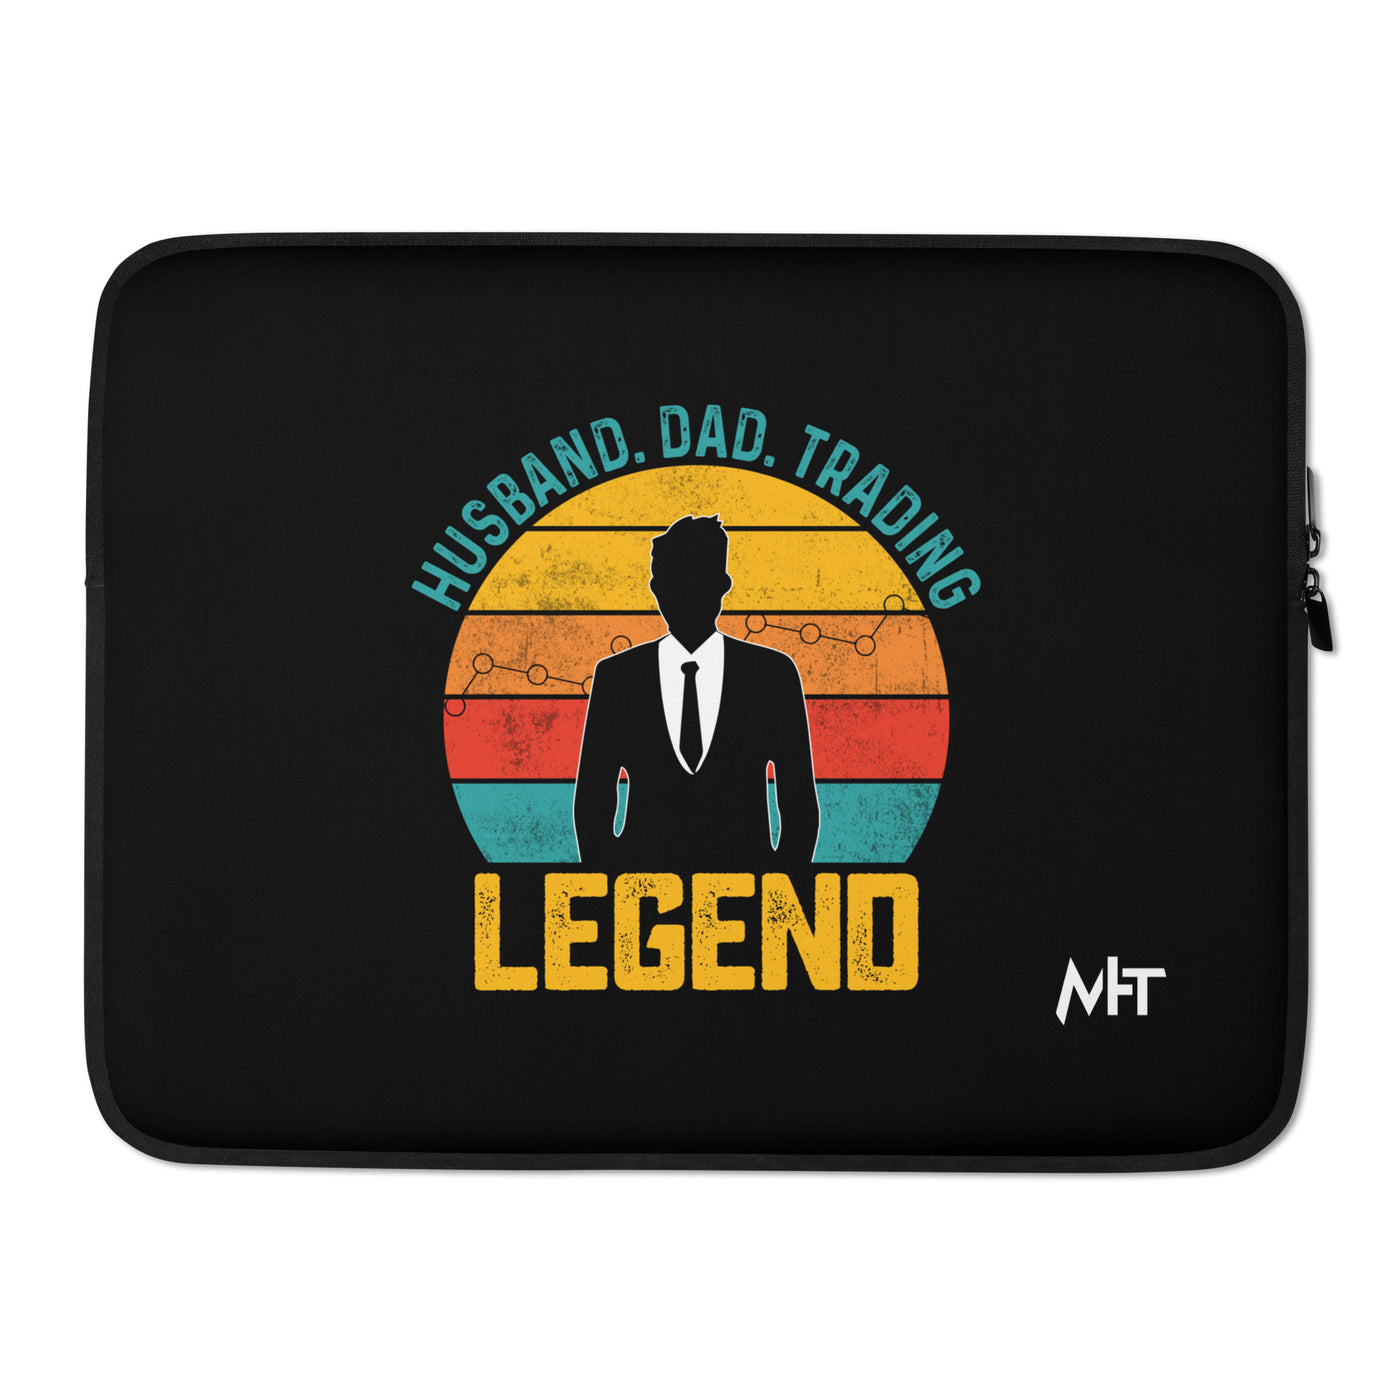 Husband.Dad.Trading Legend - Laptop Sleeve